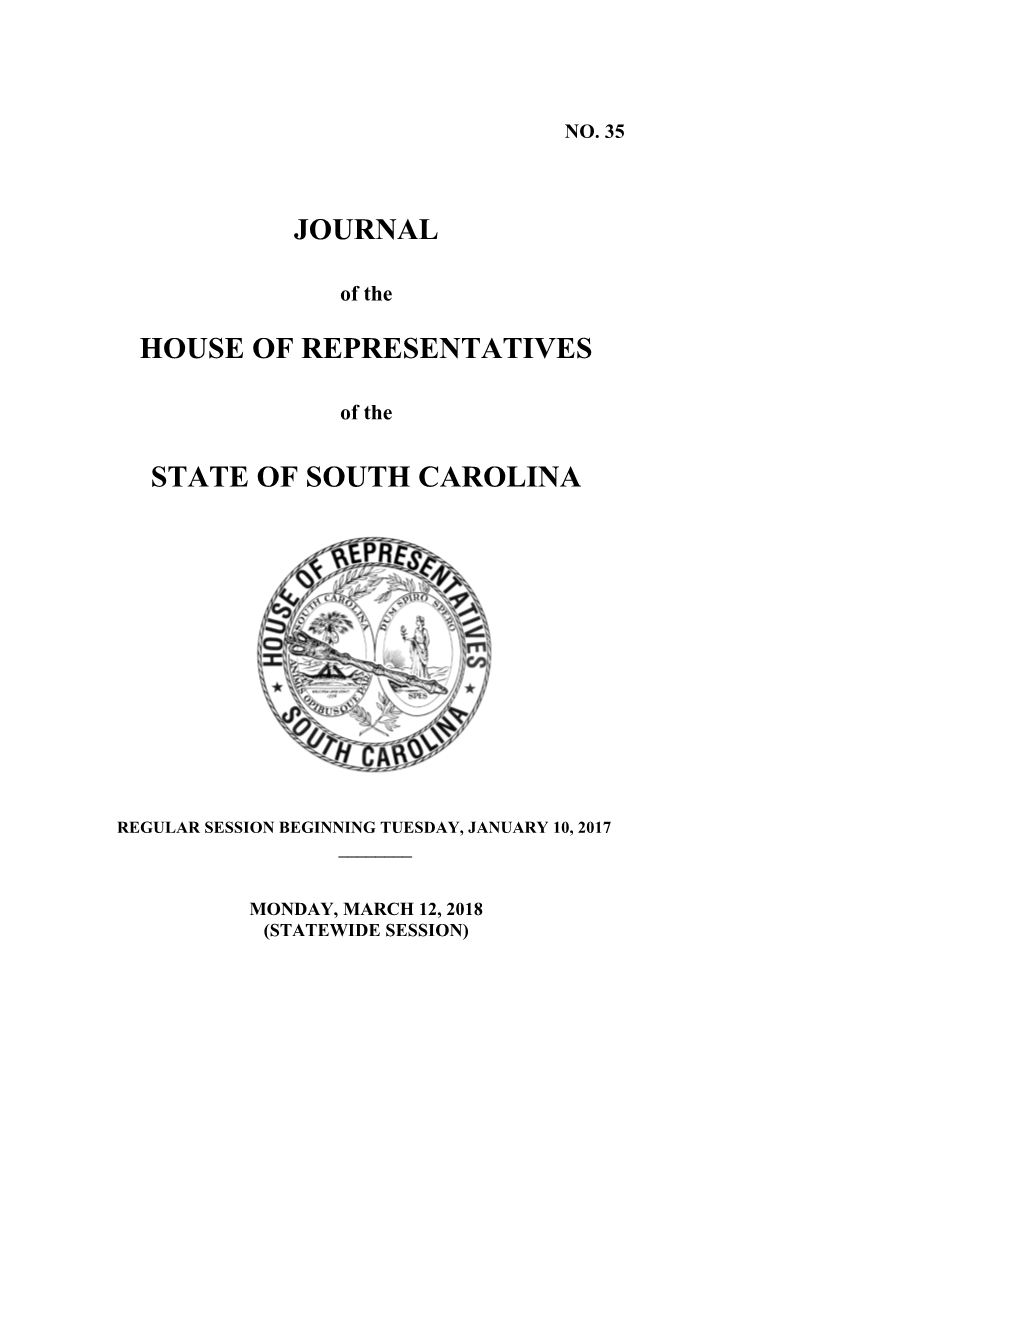 House Journal for 3/12/2018 - South Carolina Legislature Online